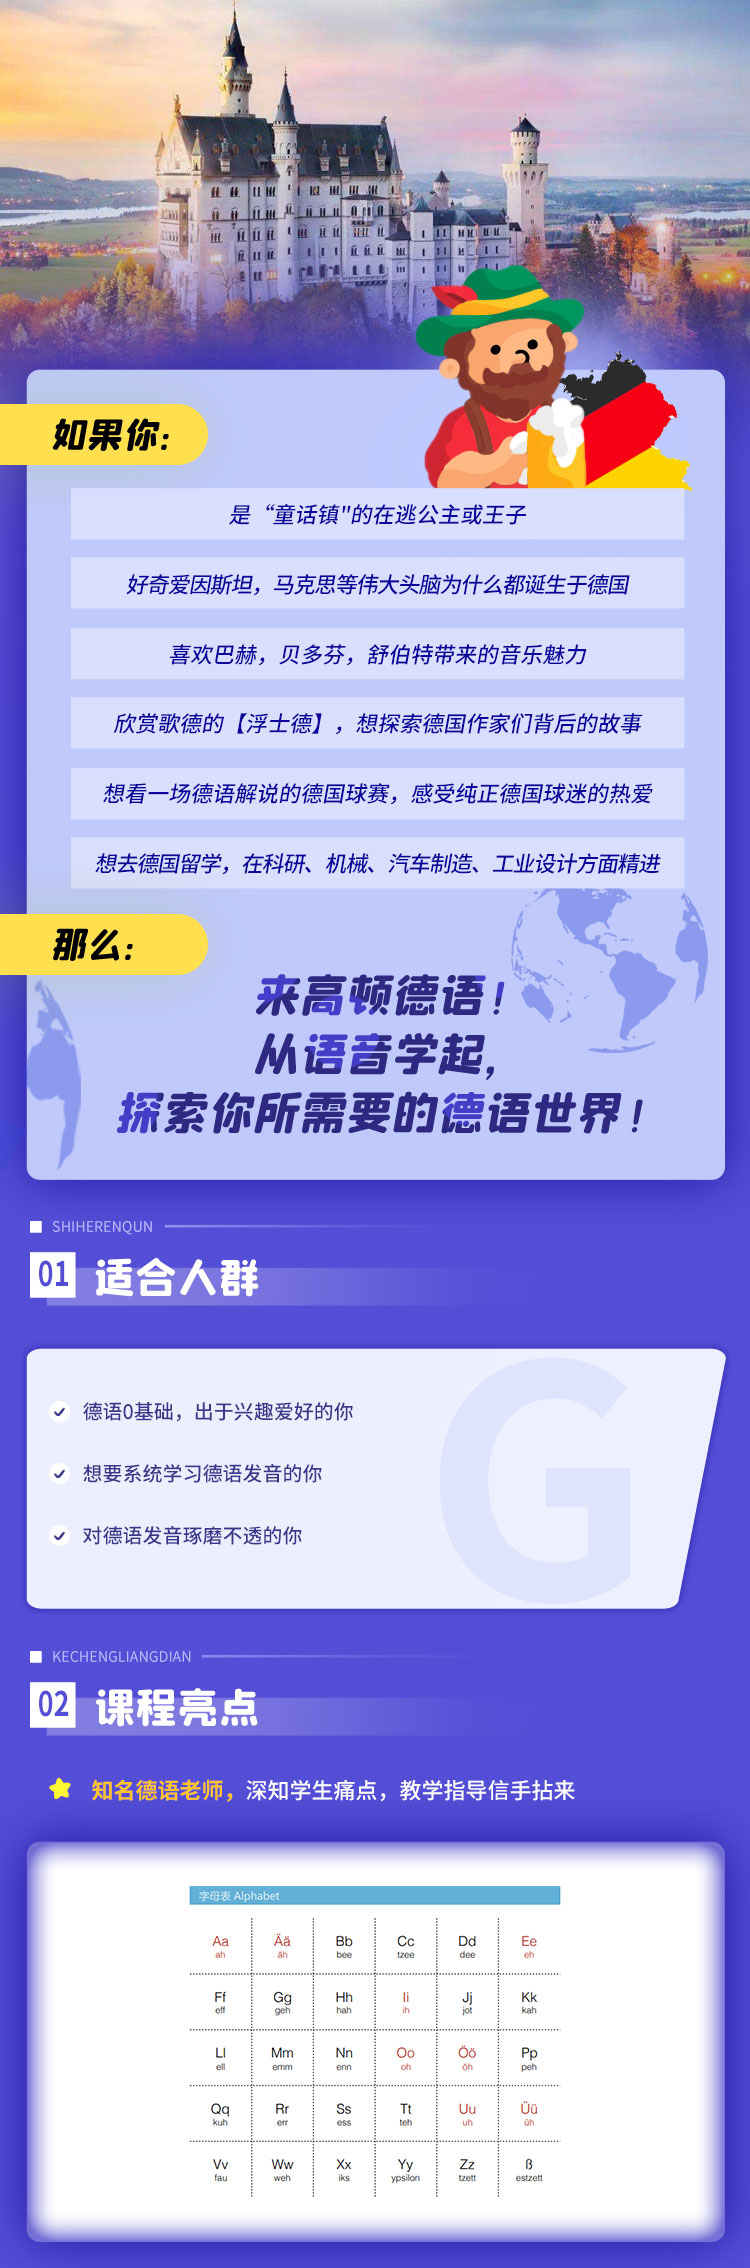 https://simg01.gaodunwangxiao.com/uploadfiles/product-center/202208/29/768ae_20220829094703.jpg